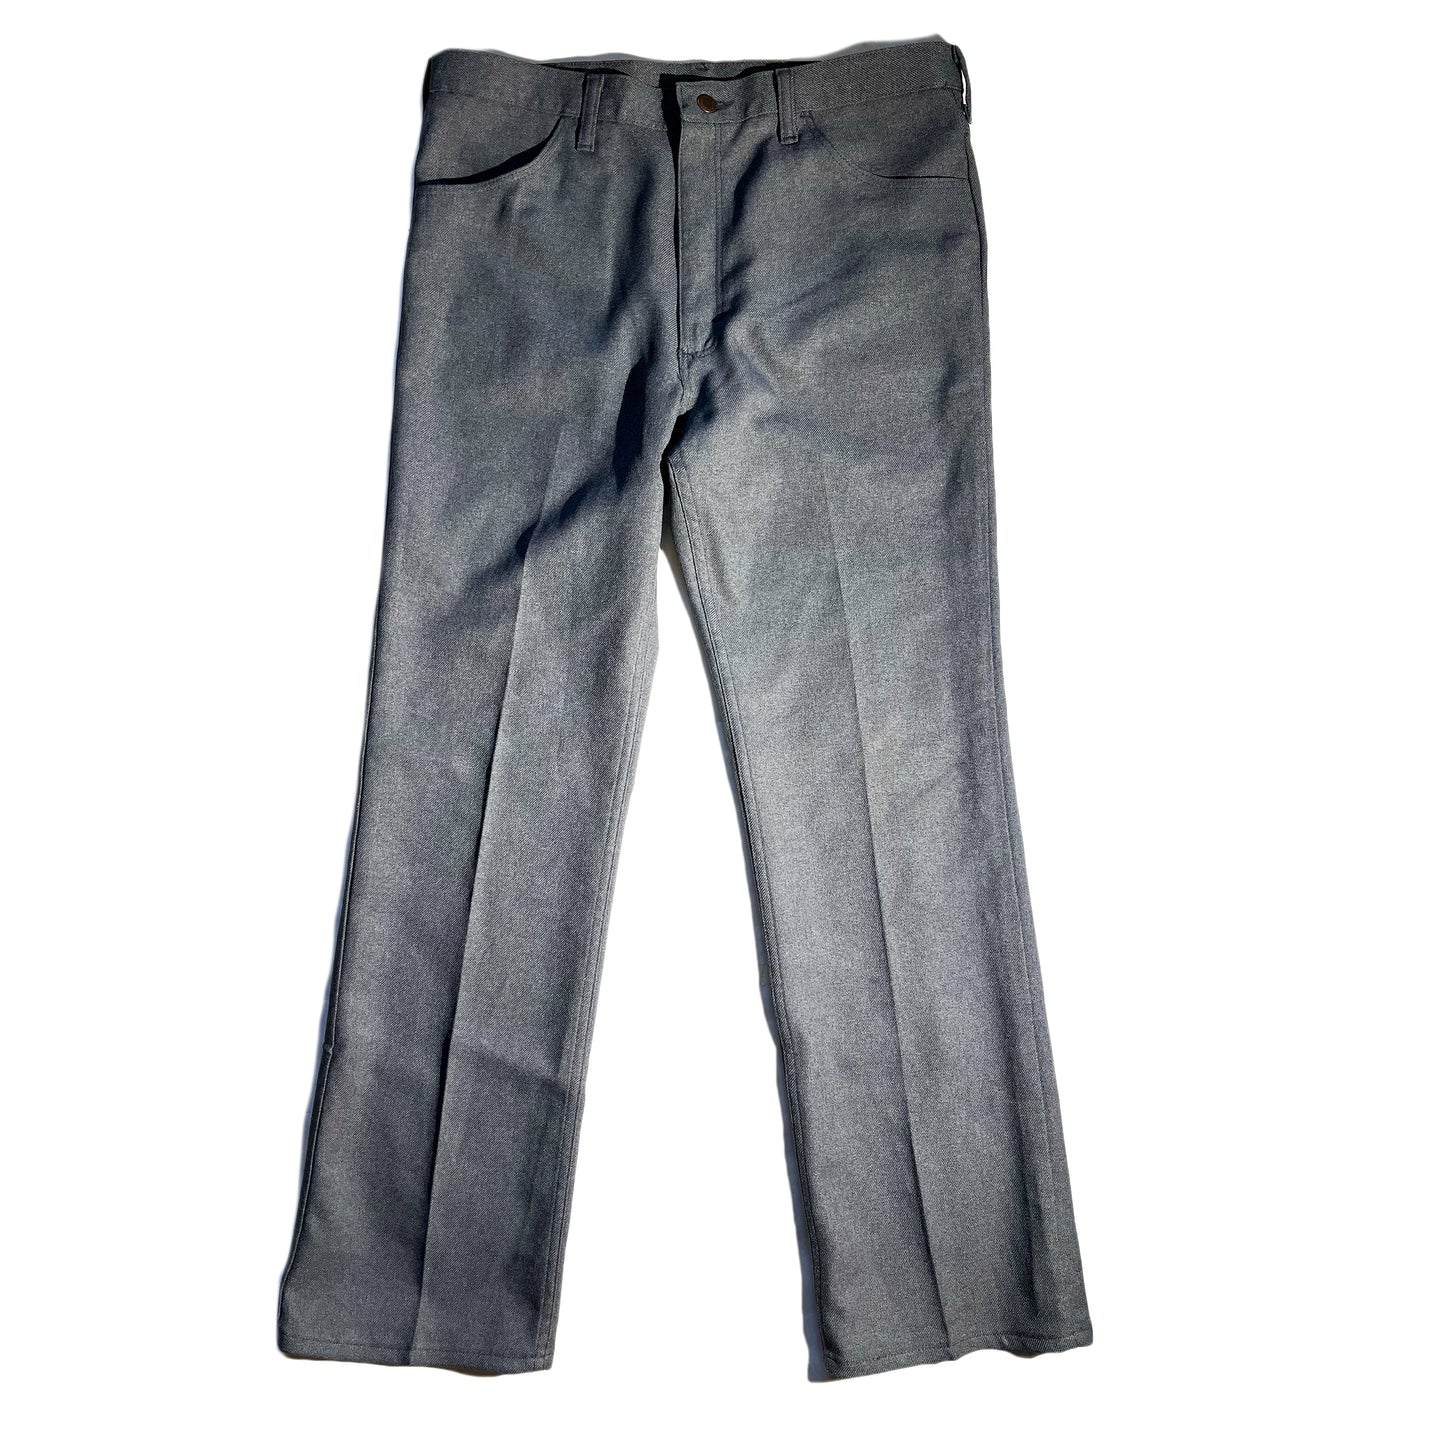 Vintage Wrangler Pants 1970's Bottoms Pleated Soft & Lightweight